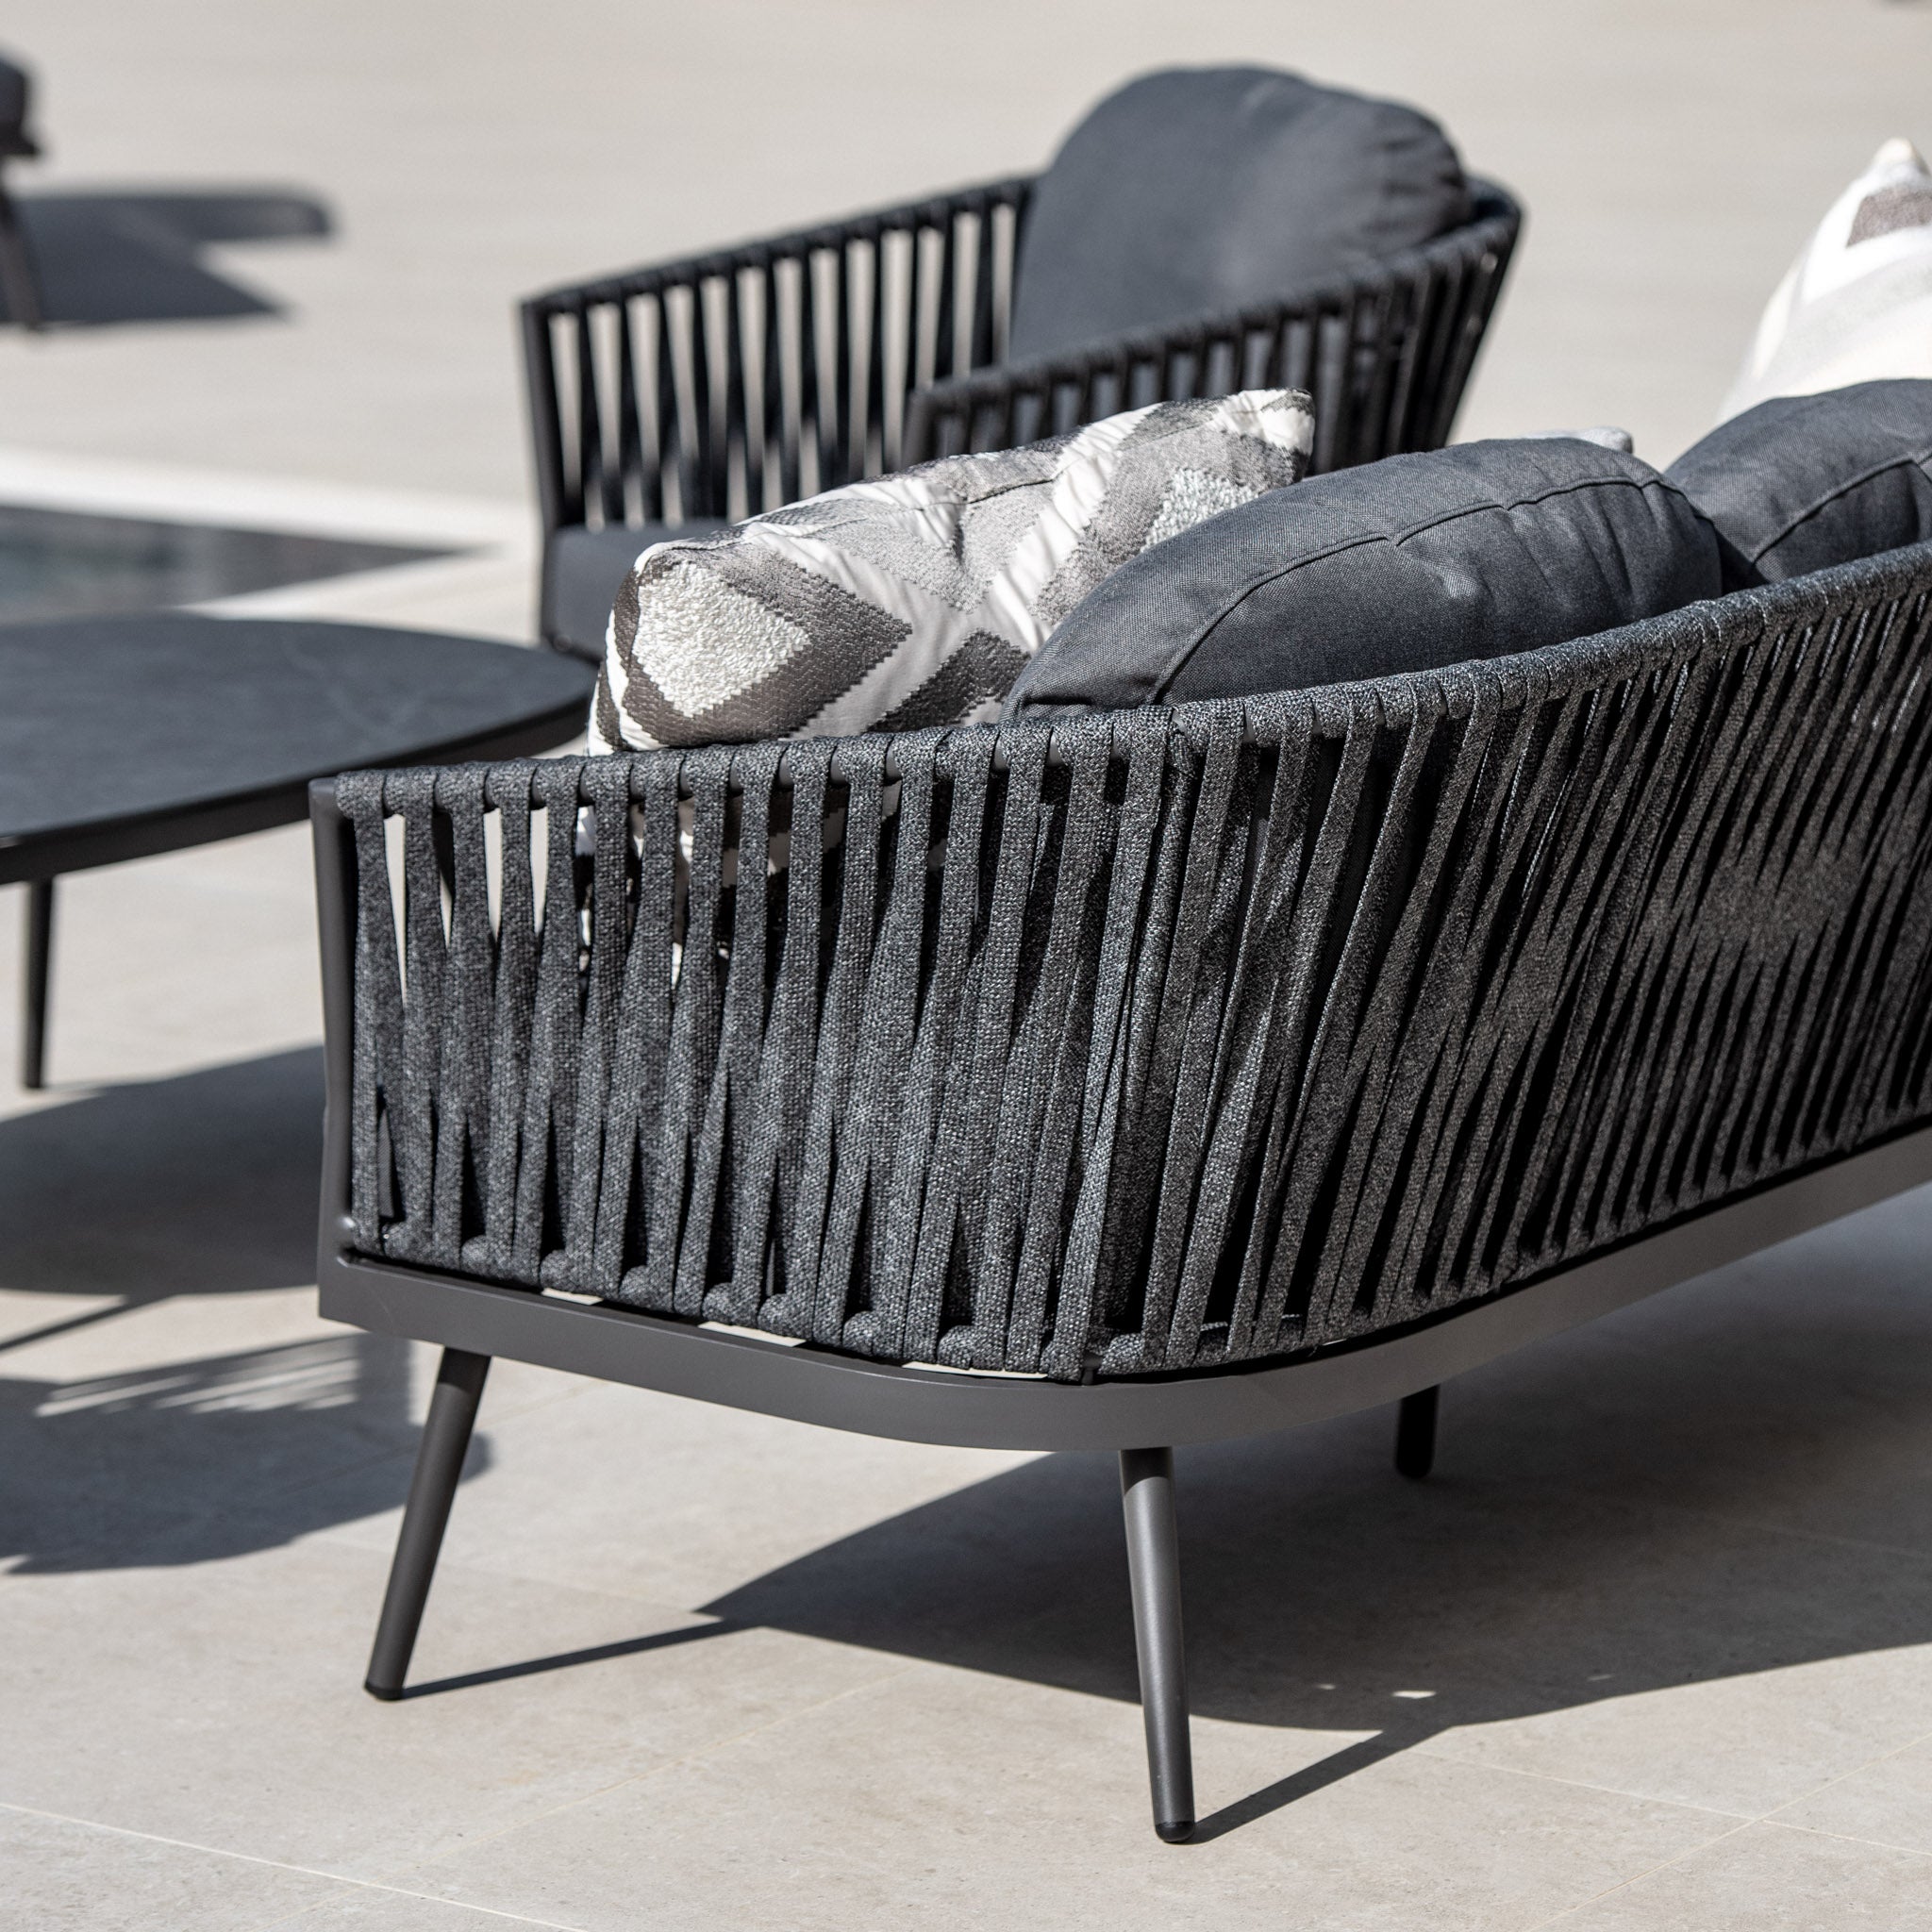 Monterrey 3 Seat Rope Sofa Set with Ceramic Table in Grey